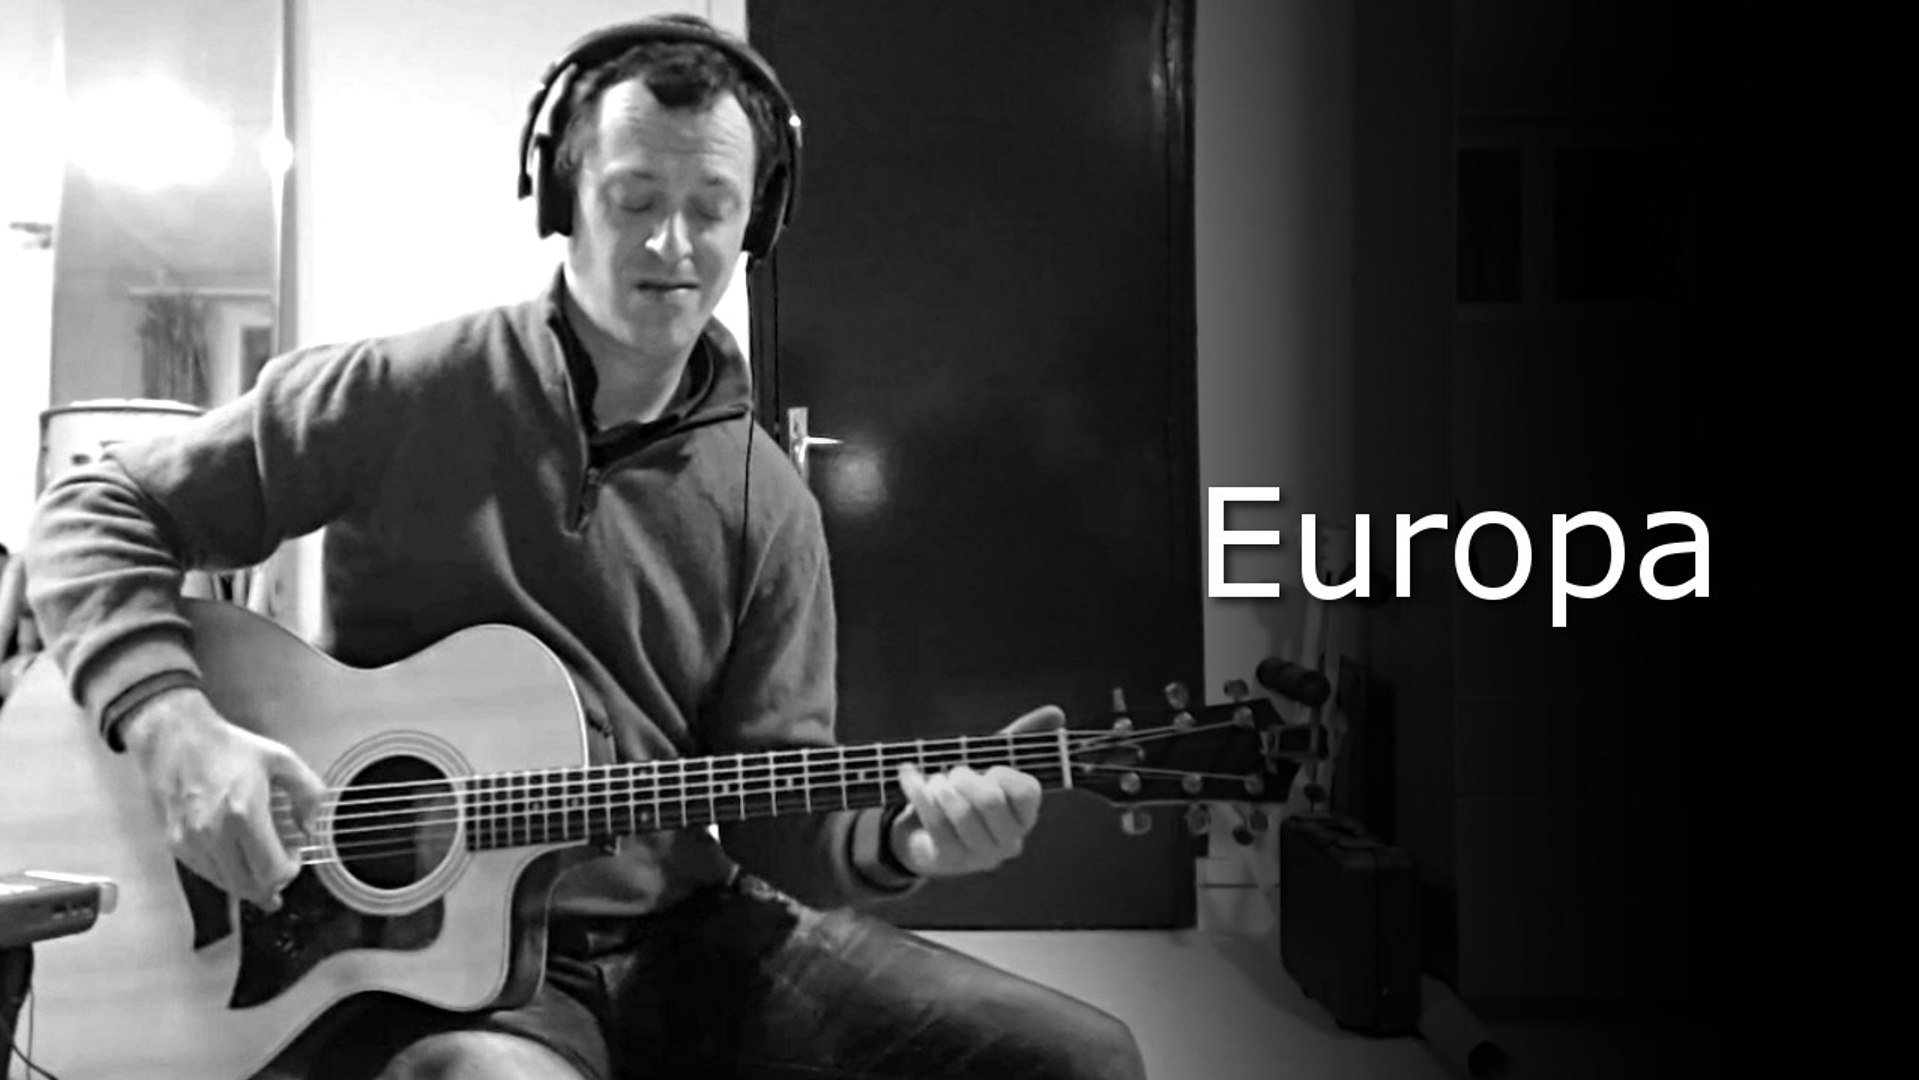 Europa - Santana (Acoustic solo cover) - Vidéo Dailymotion